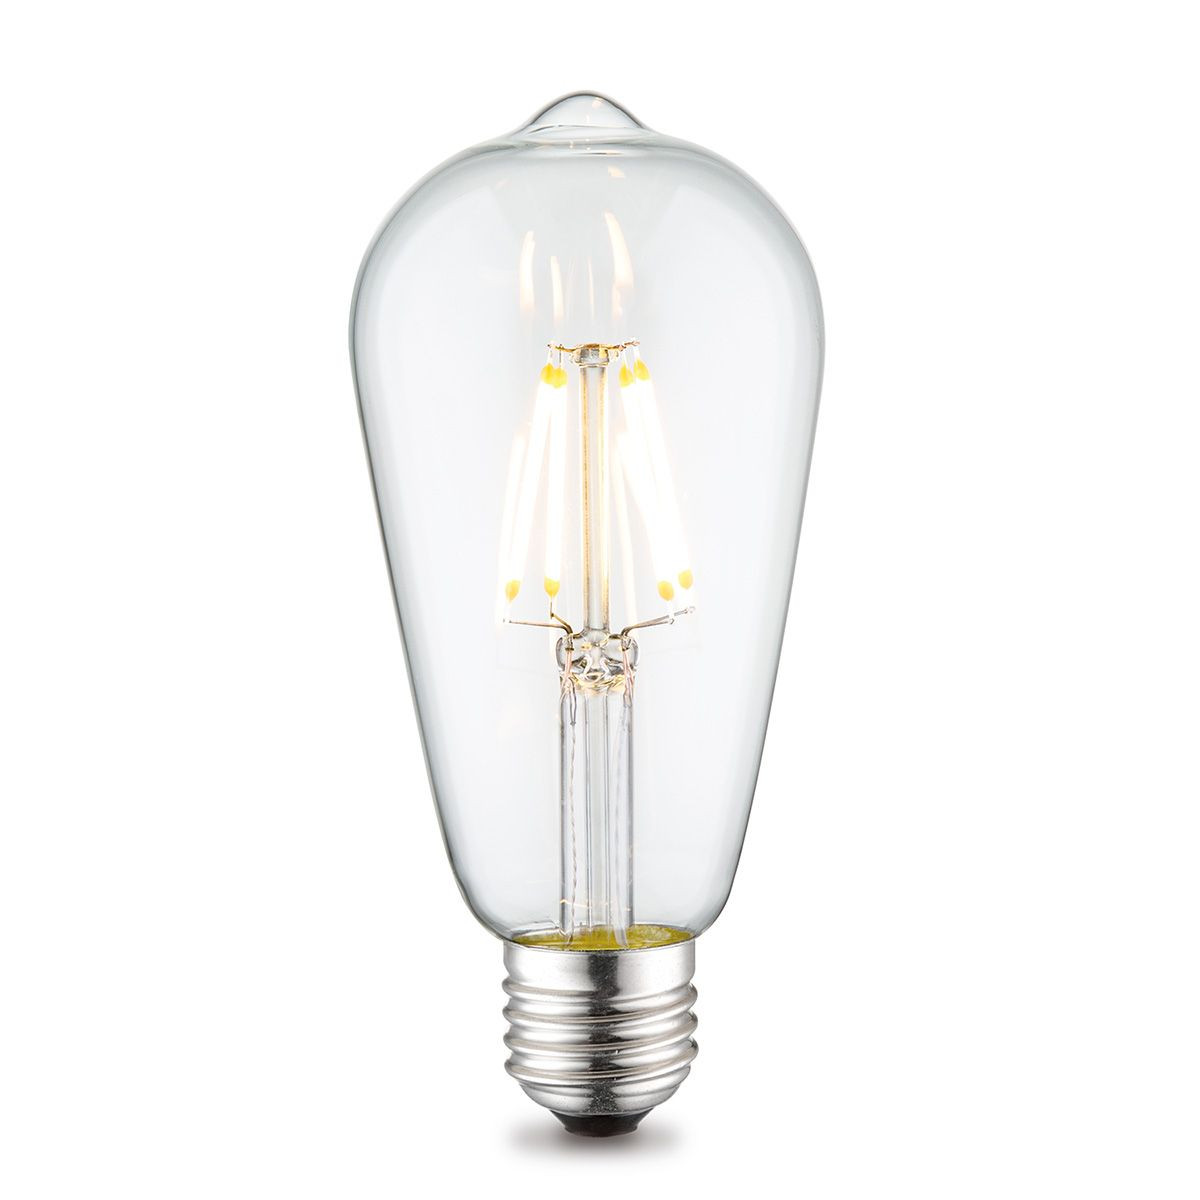 Edison Vintage LED lamp E27 LED filament lichtbron, Deco Drop ST64, 6.4/6.4/14cm, Helder, Retro LED lamp Dimbaar, 6W 700lm 3000K, warm wit licht, geschikt voor E27 fitting